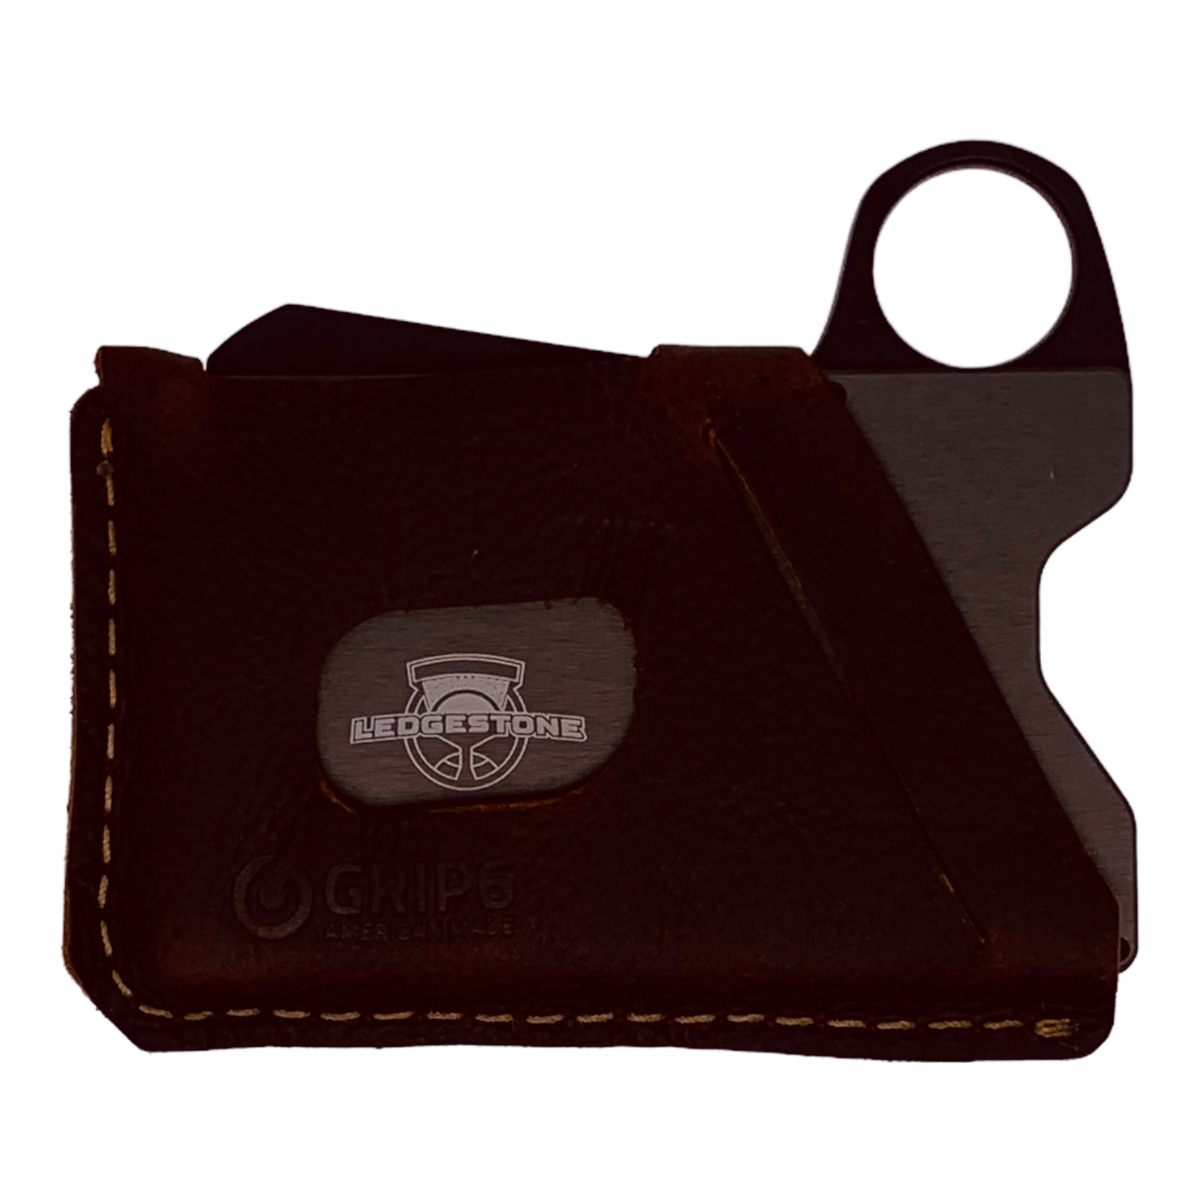 Grip6 Wallet - Ledgestone